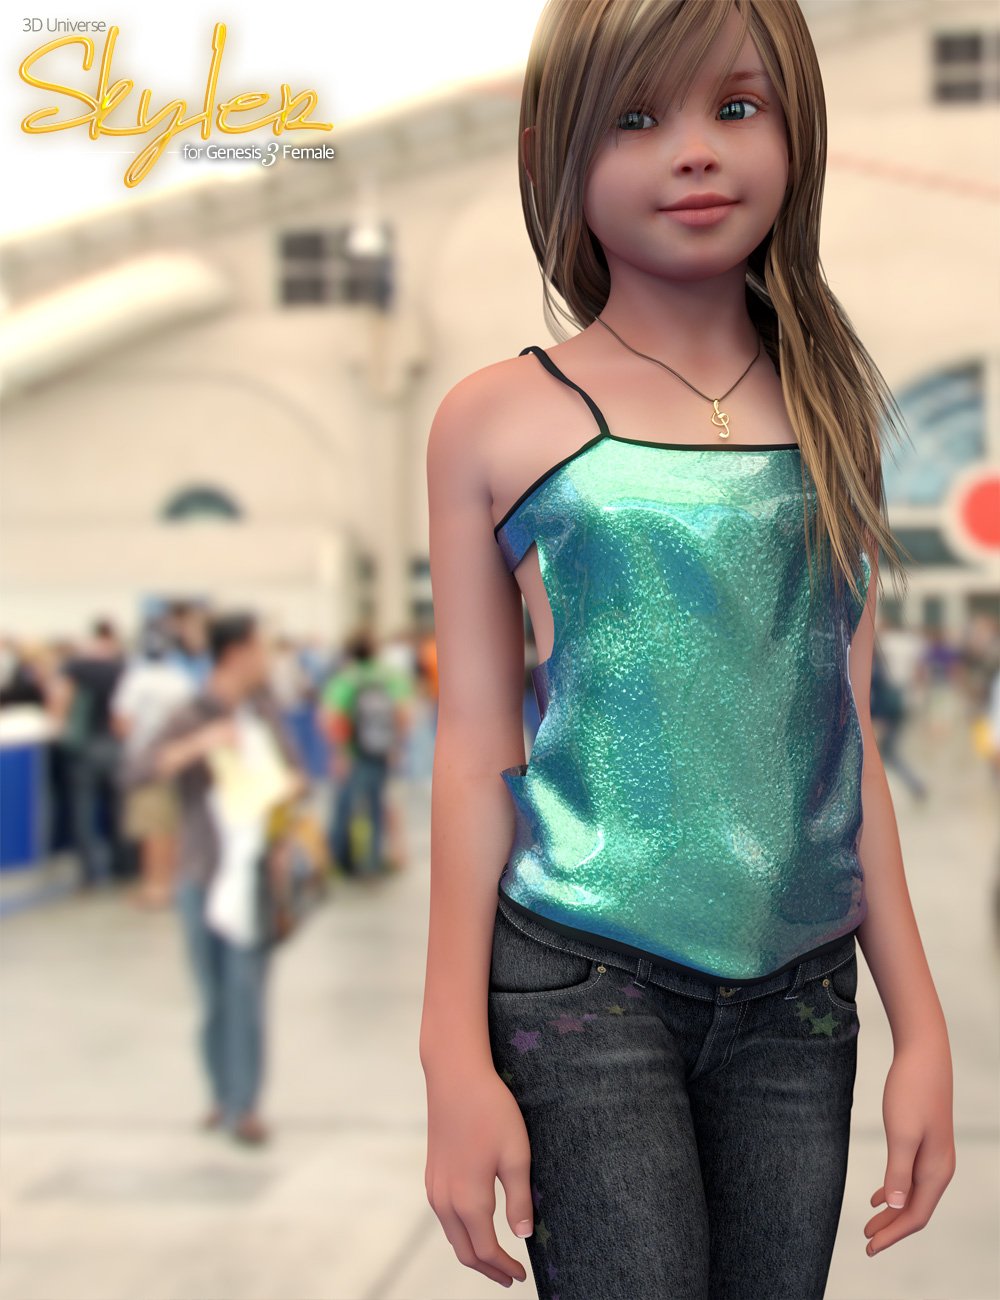 Skyler for Genesis 3 Female(s) Bundle by: 3D Universe, 3D Models by Daz 3D